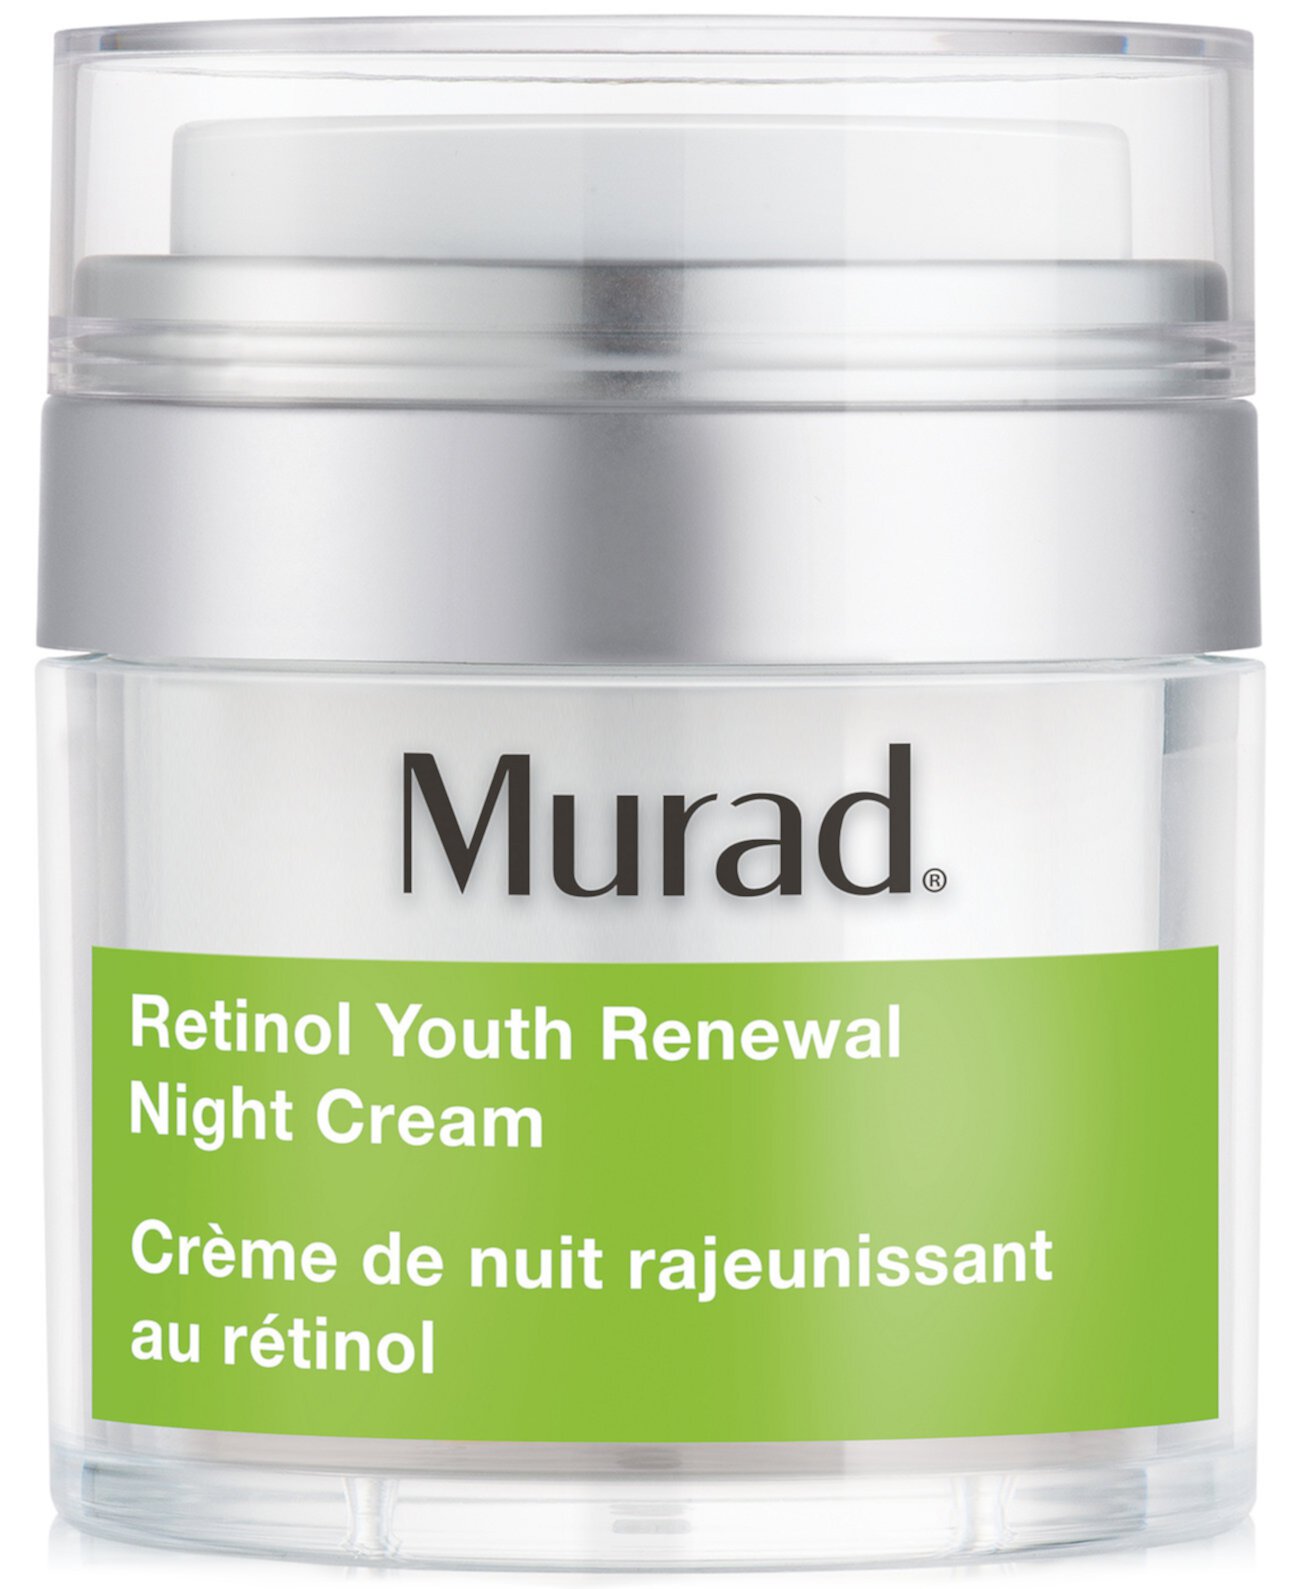 Retinol Youth Renewal Ночной крем, 1,7 унции. Murad